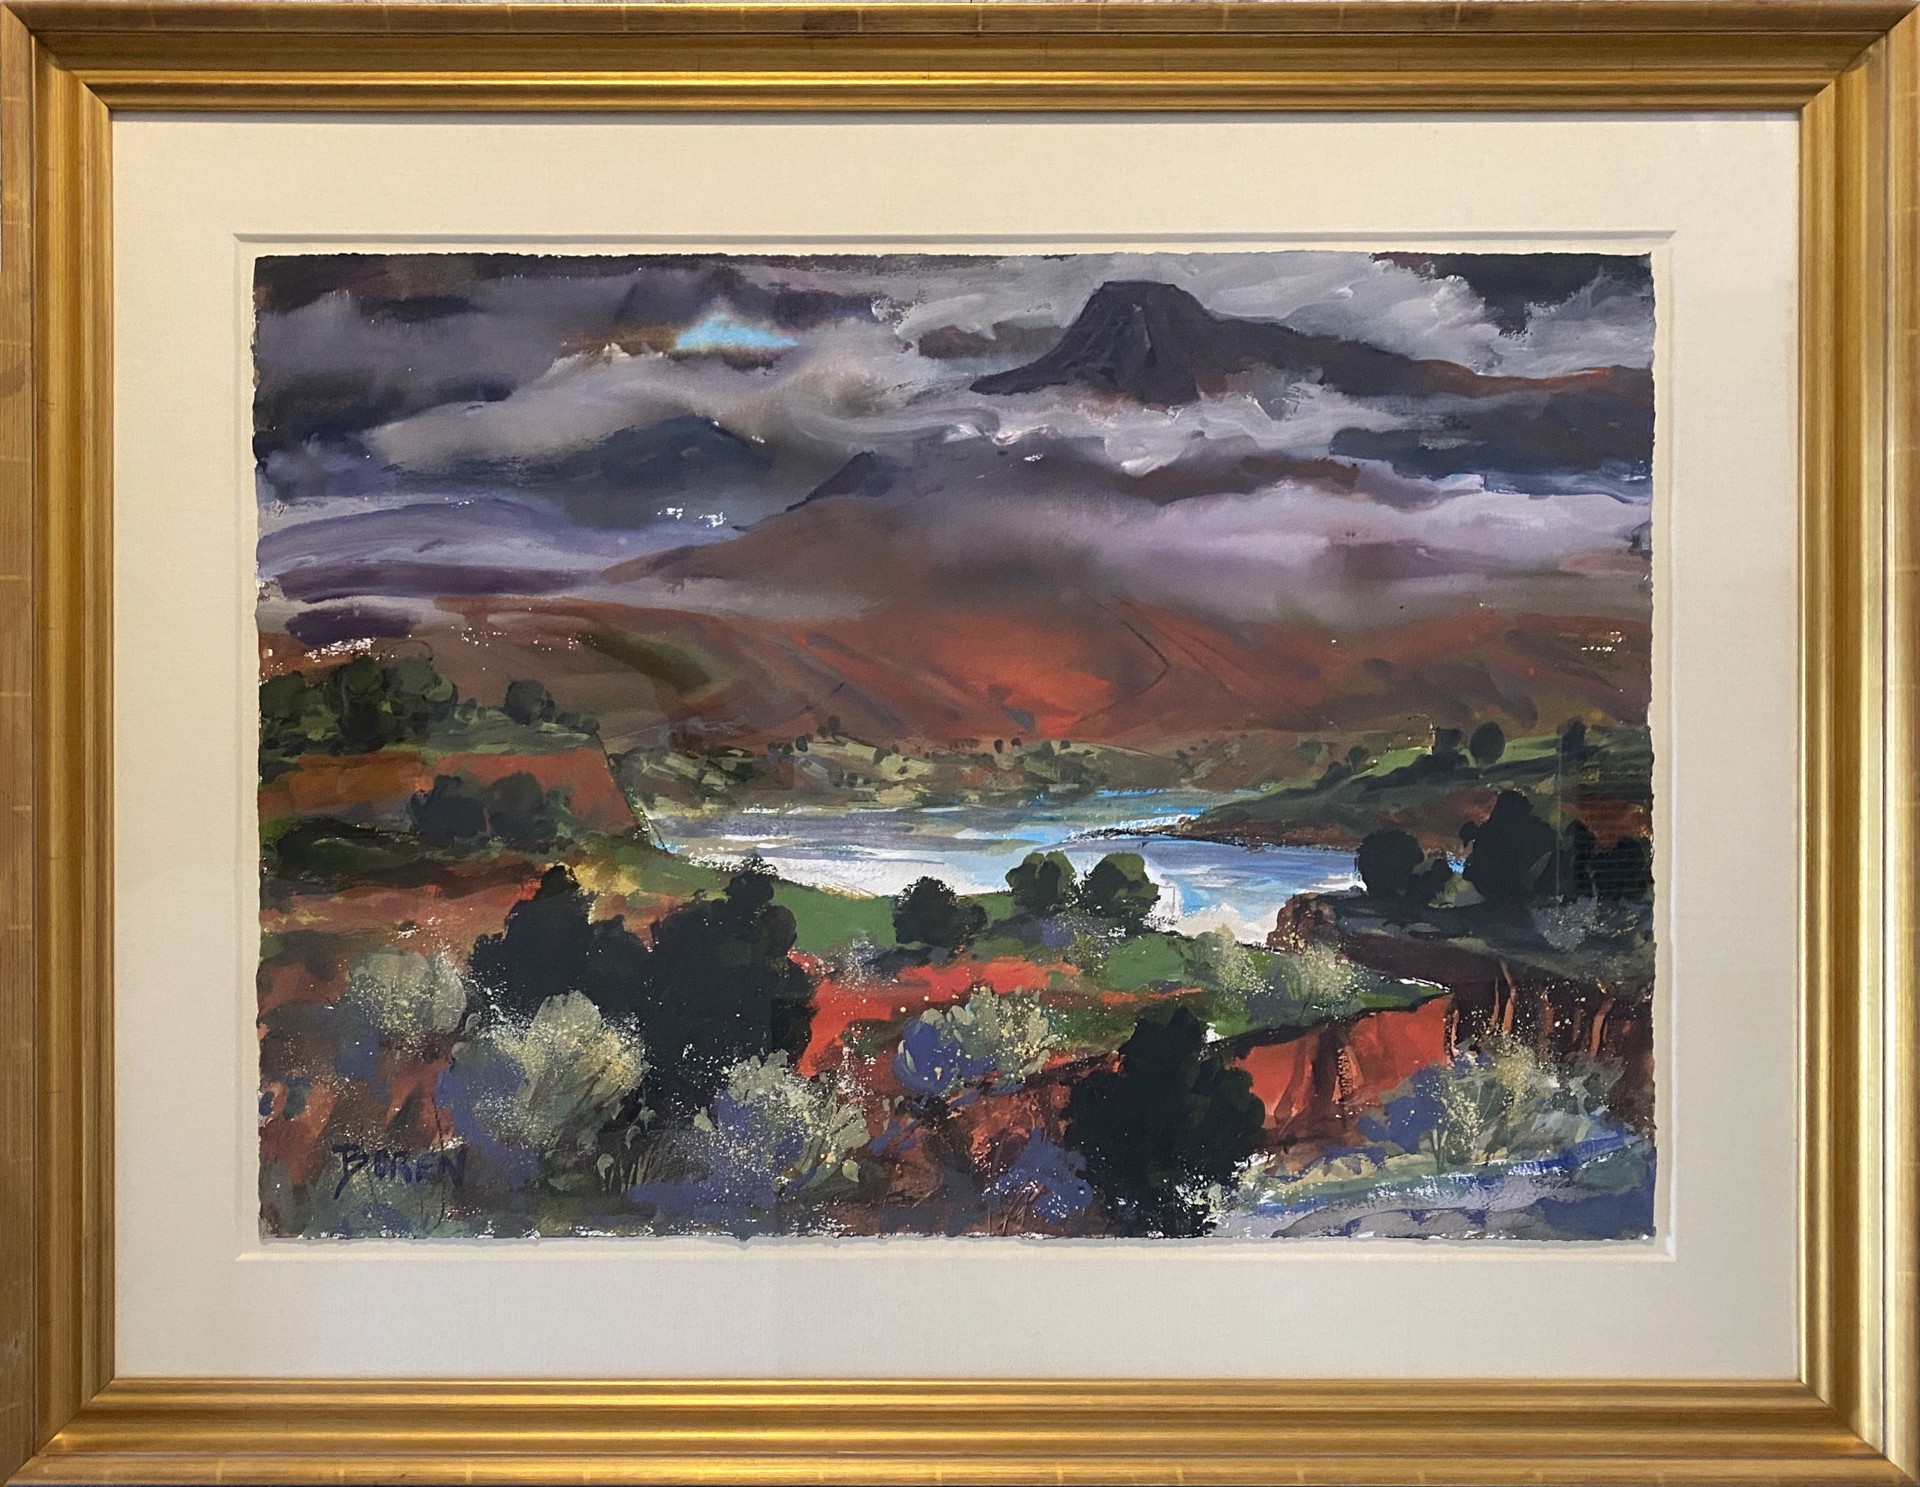 Watercolor painting by fine artist Evelyne Boren "Clouds Over Cerro Pedernal" depicting a landscape.